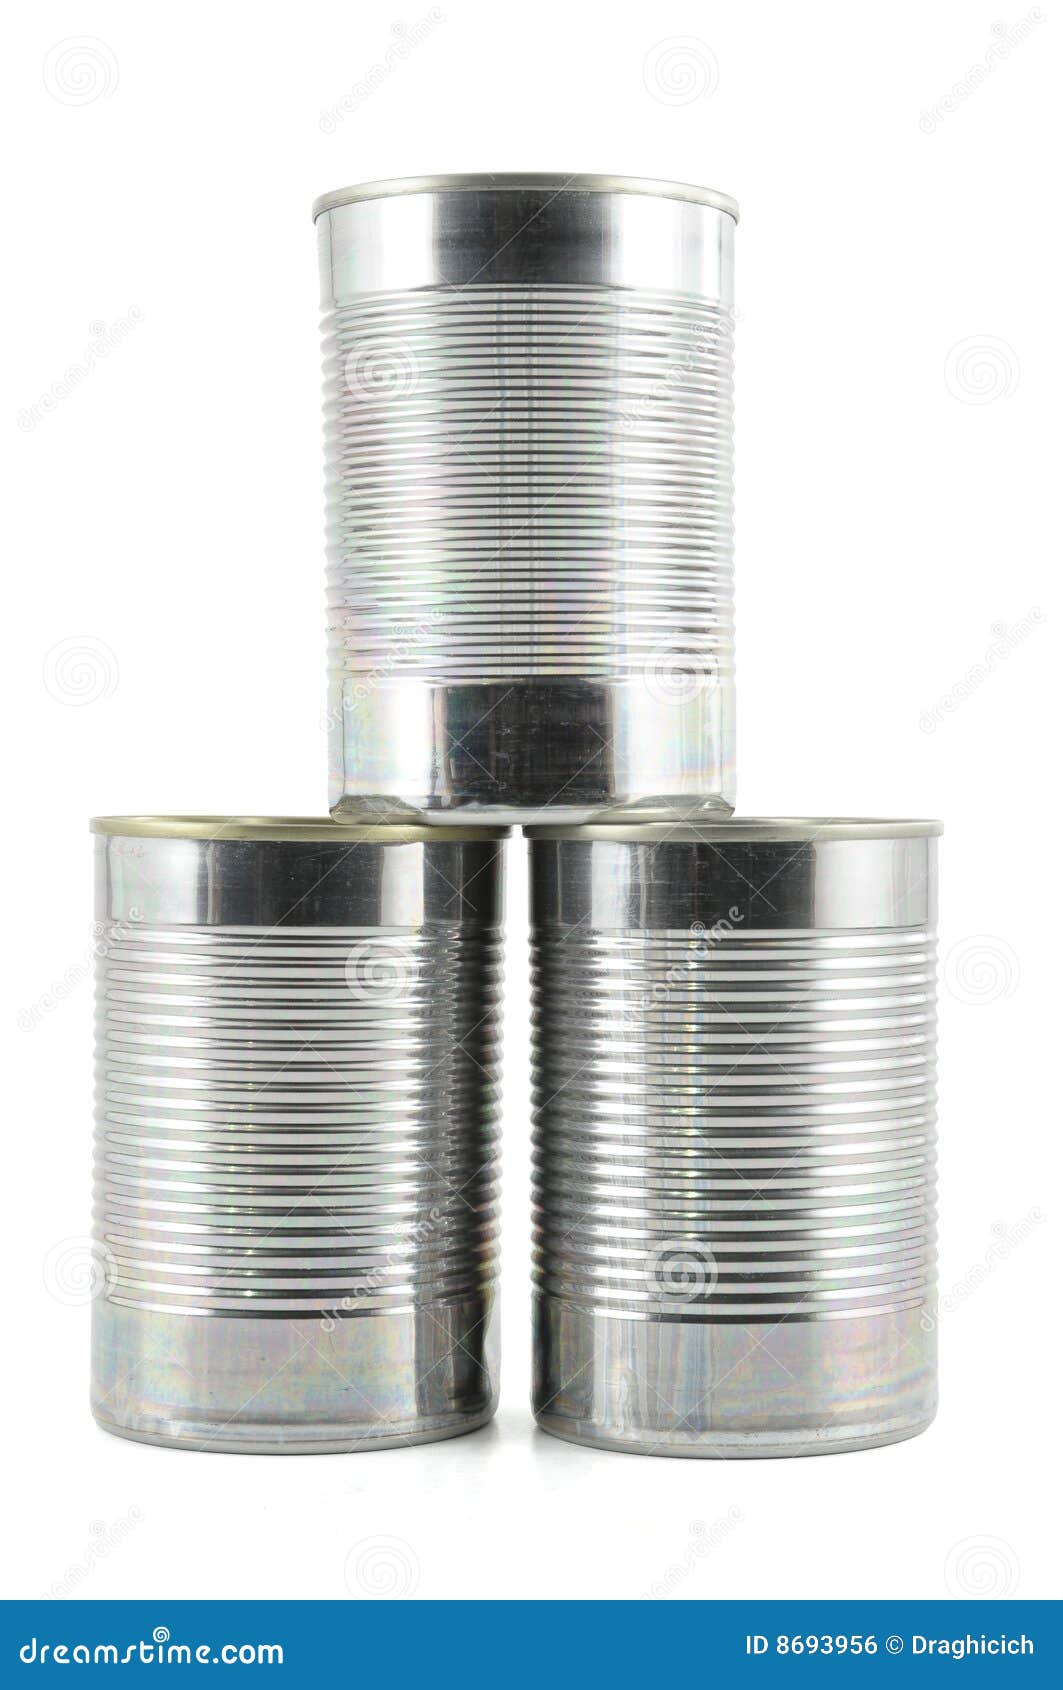 three-cans-8693956.jpg